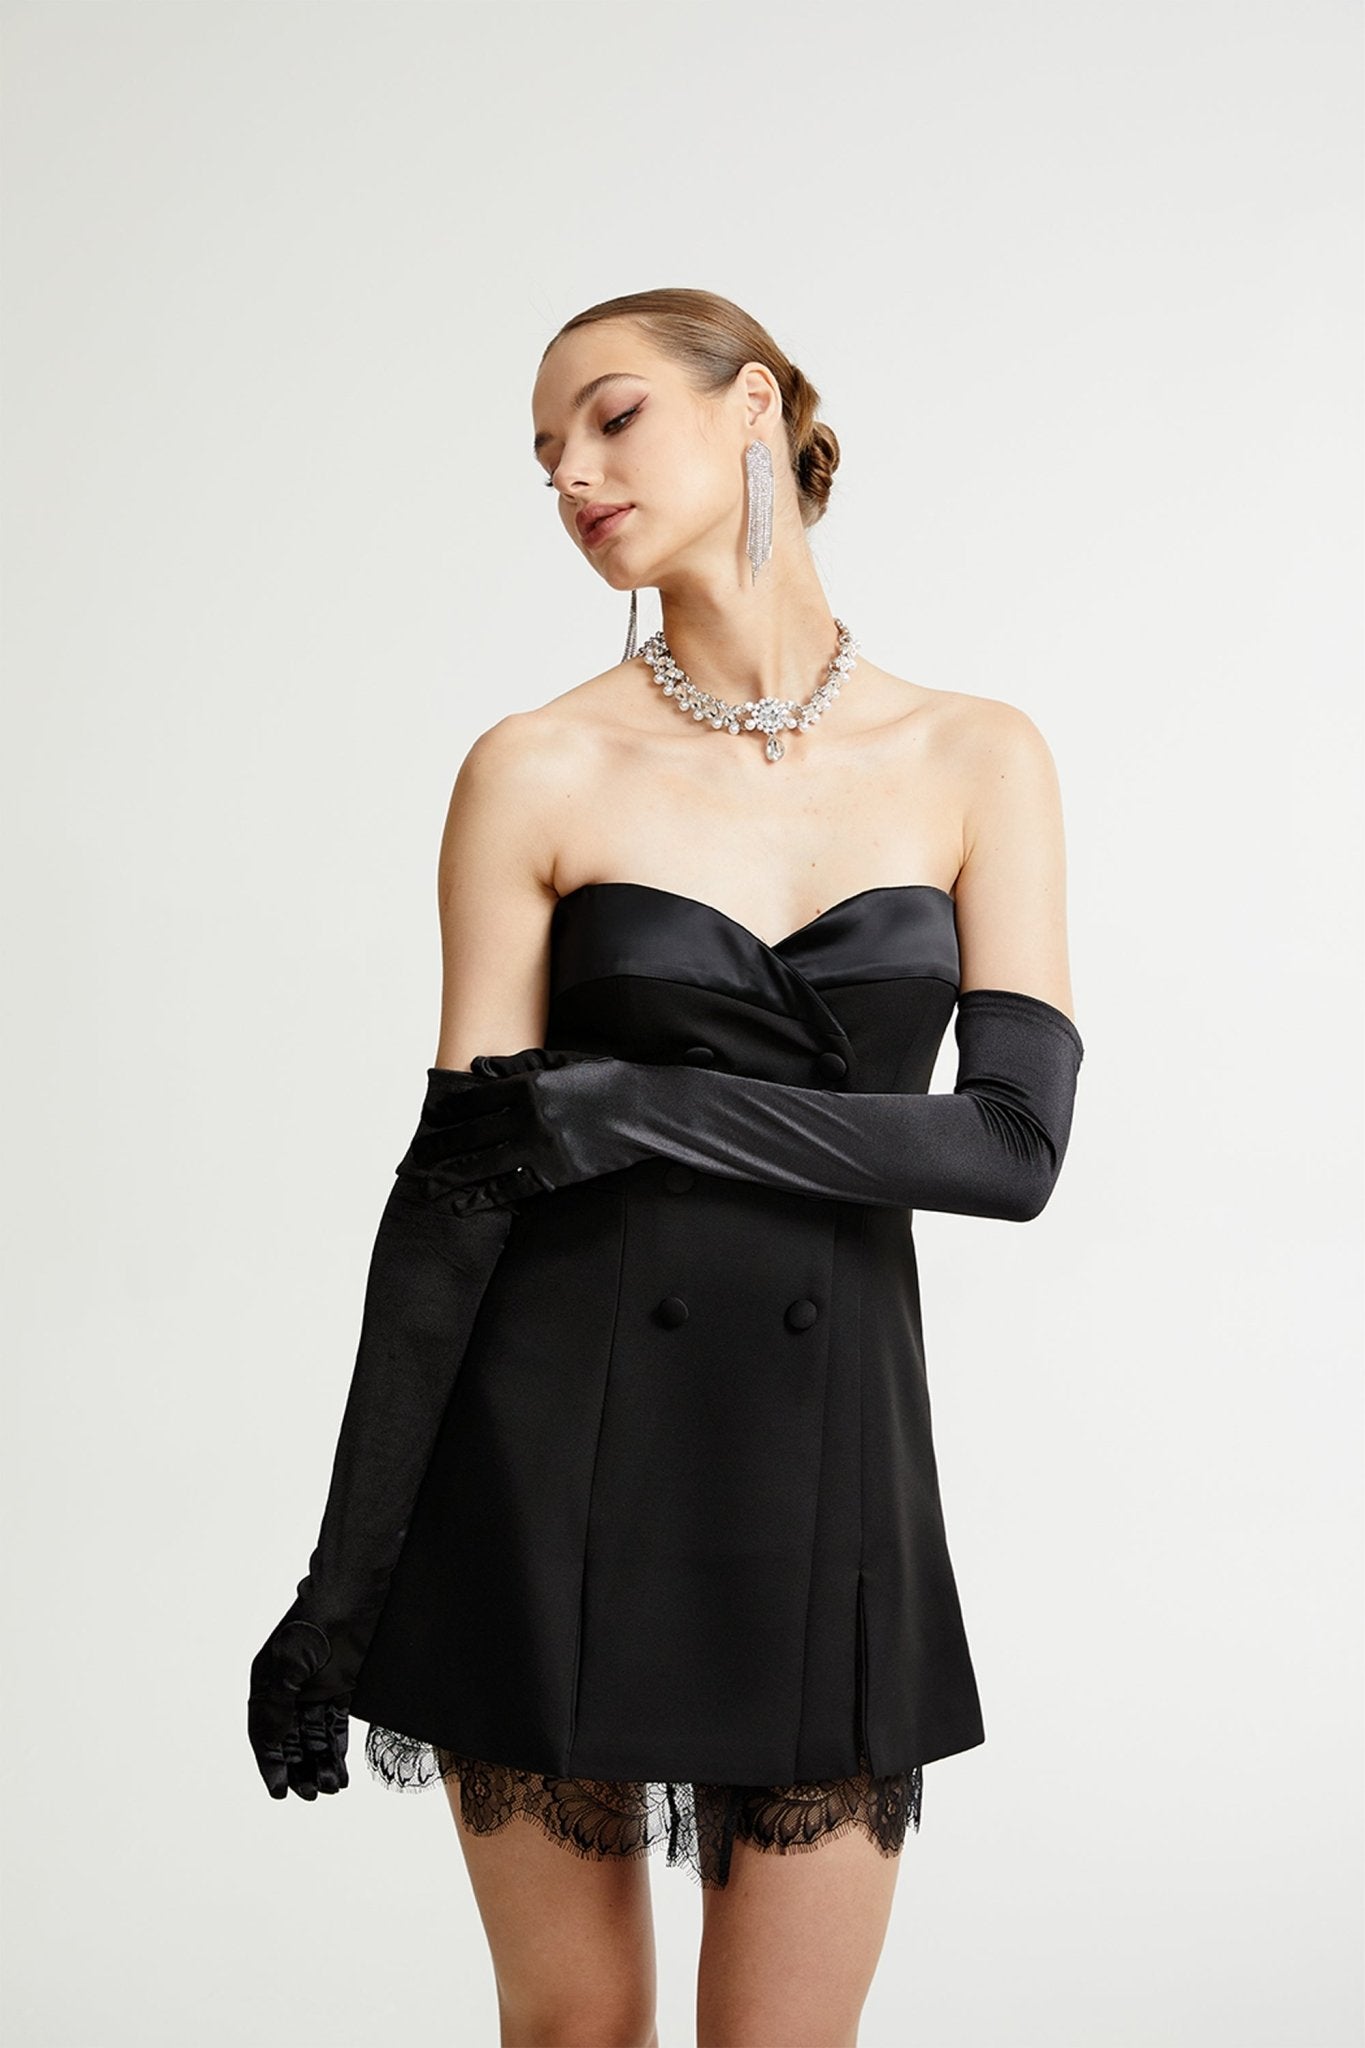 Zephyra dress - Miss Rosier - Women's Online Boutique